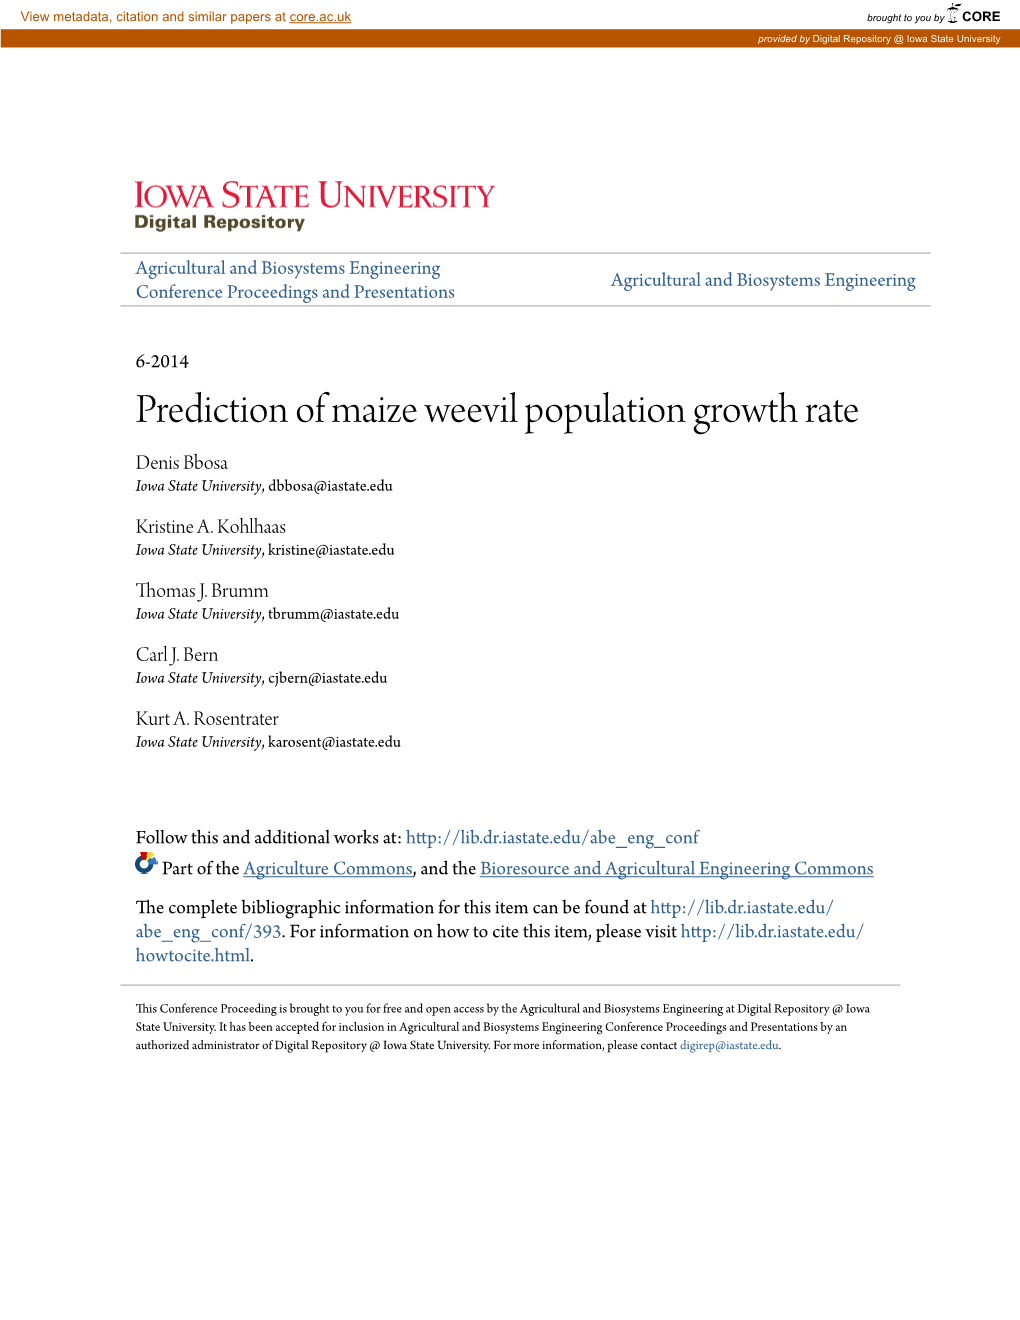 Prediction of Maize Weevil Population Growth Rate Denis Bbosa Iowa State University, Dbbosa@Iastate.Edu